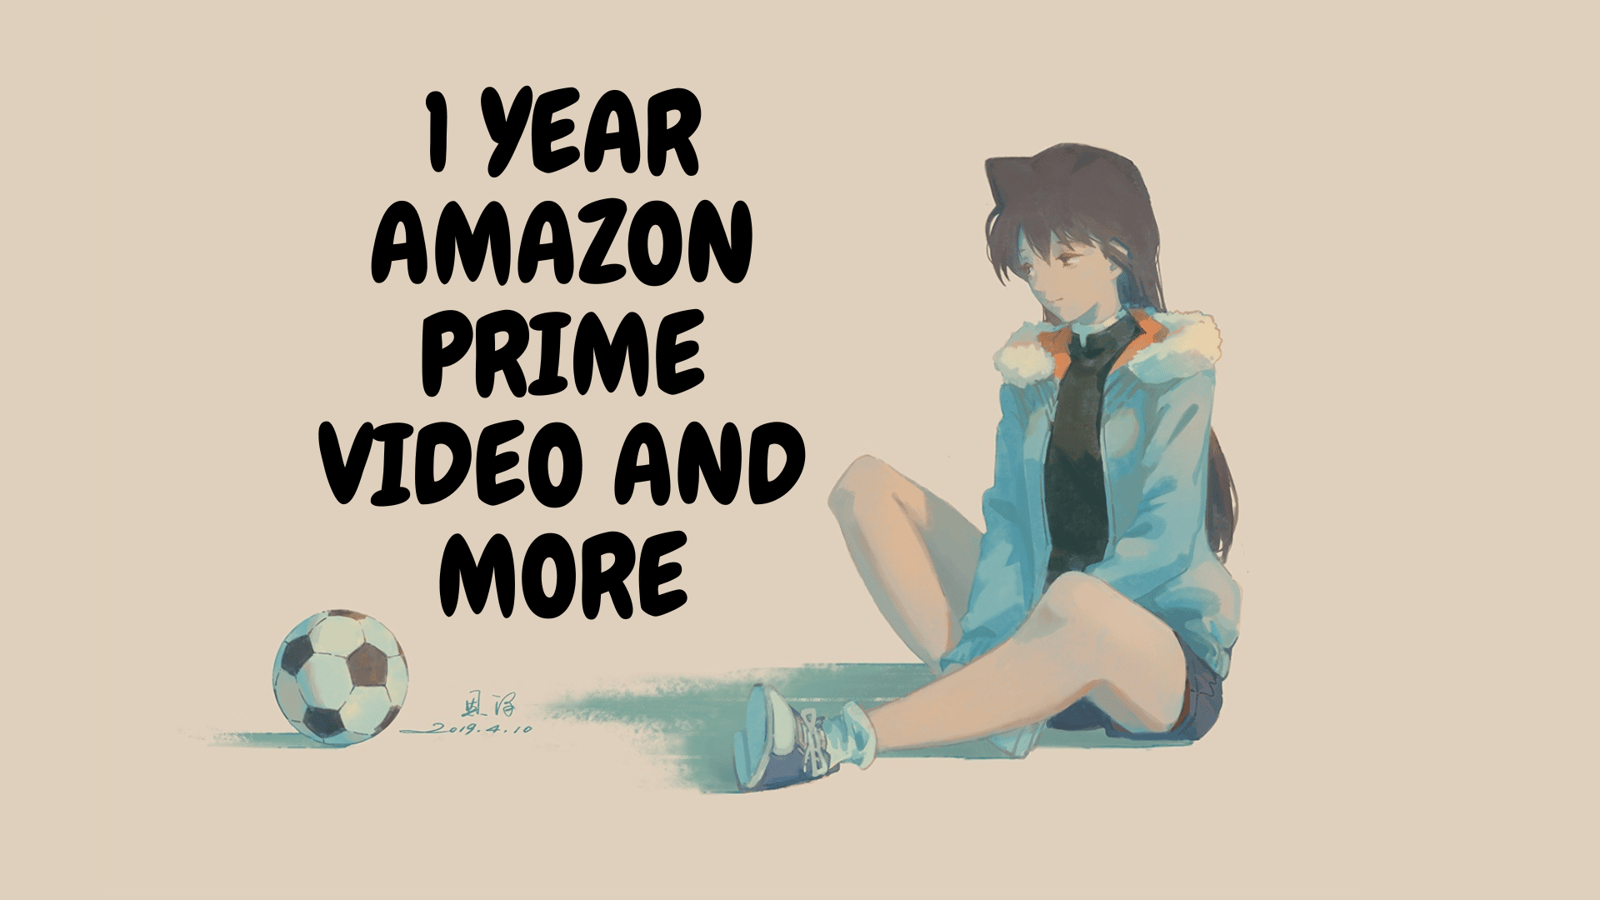 1 Year of Amazon Prime Video/Gaming/Music/E-Books/Storage